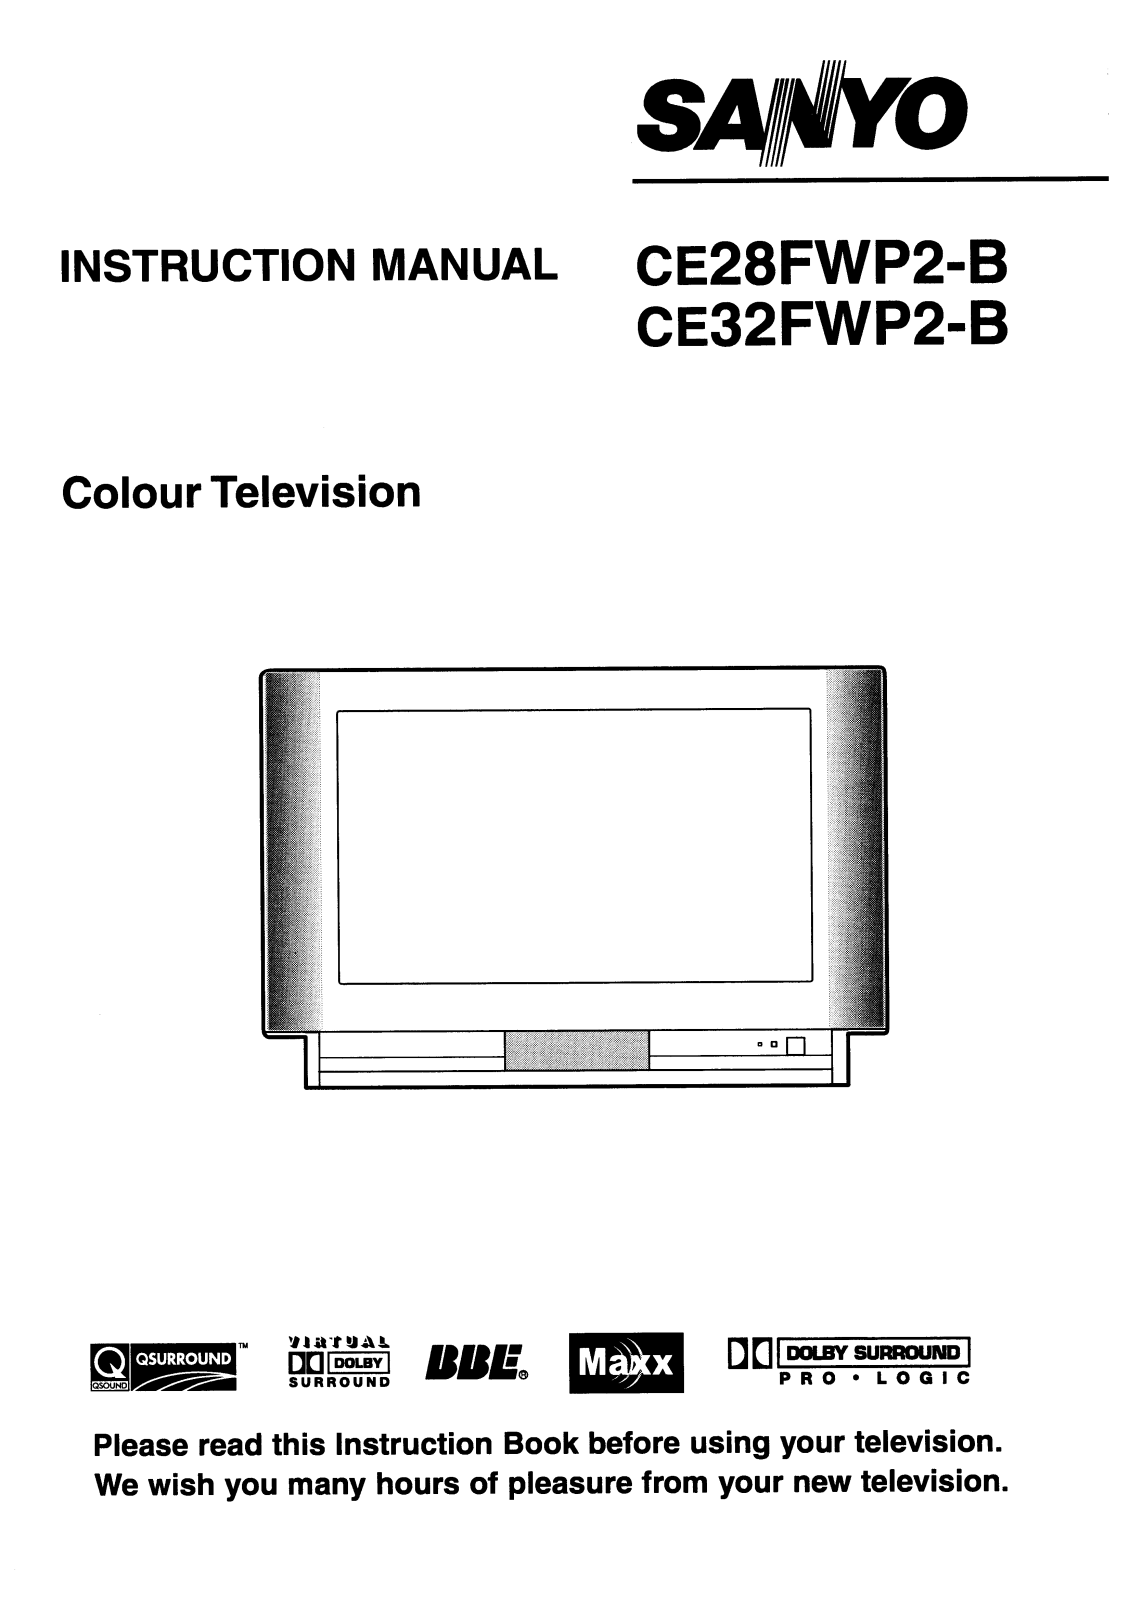 Sanyo CE28FWP2-B, CE32FWP2-B Instruction Manual